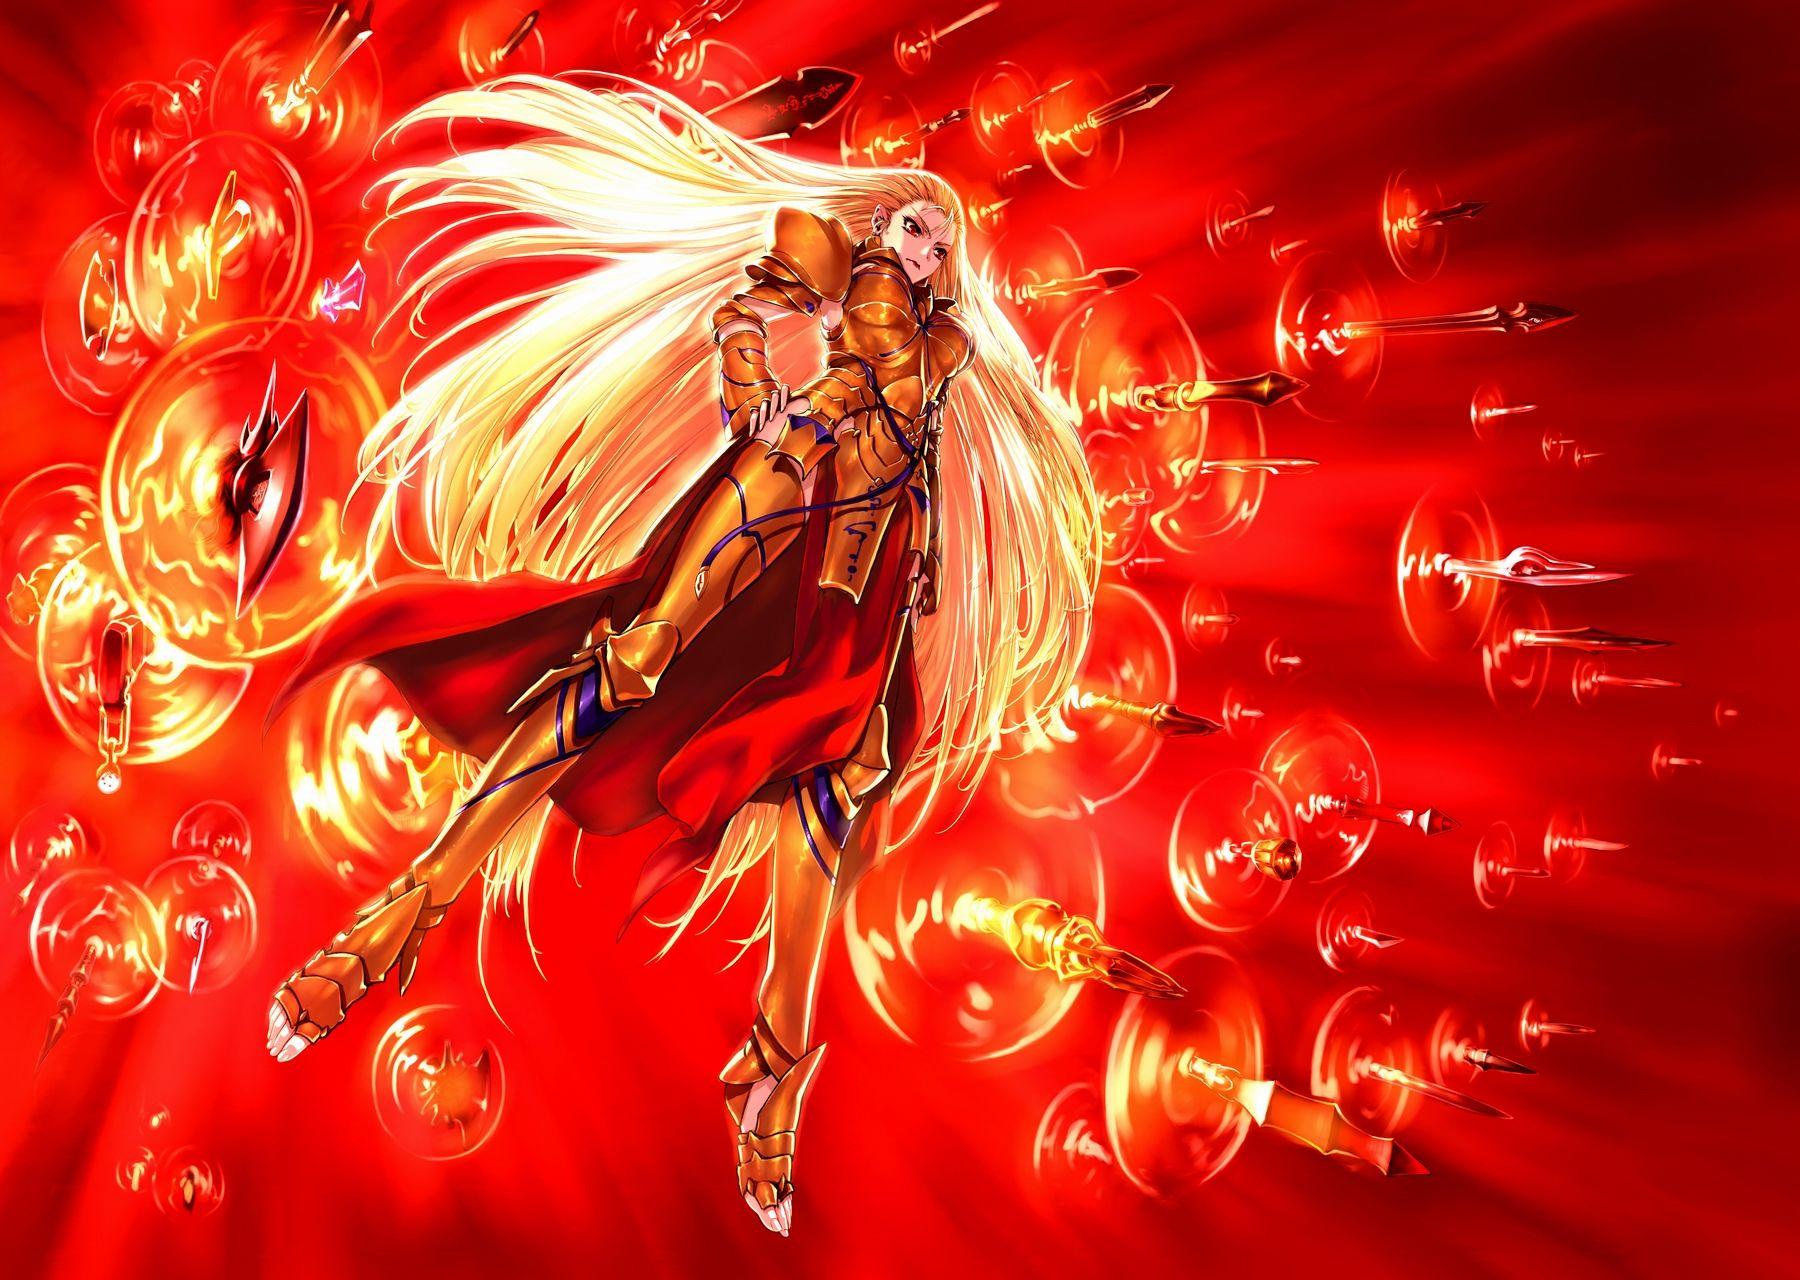 Mobile wallpaper Anime Fatestay Night Gilgamesh Fate Series Fate  Series 511825 download the picture for free